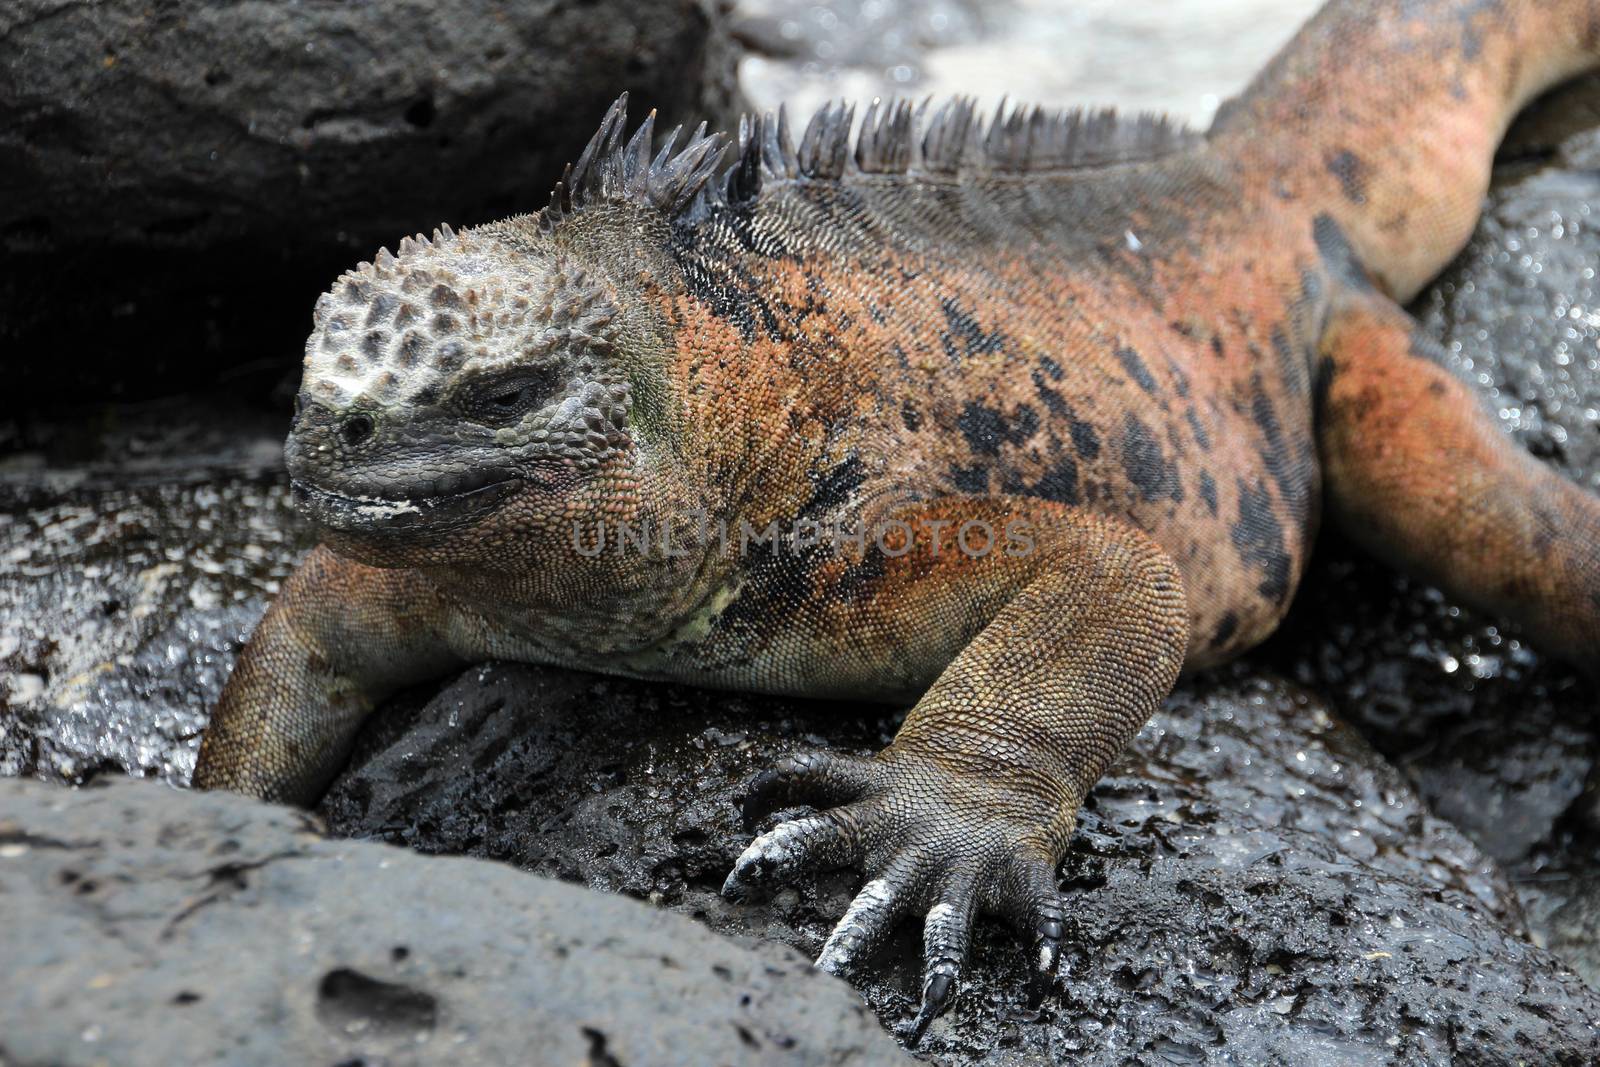 Galapagos Marine Iguana resting on lava rocks by cicloco